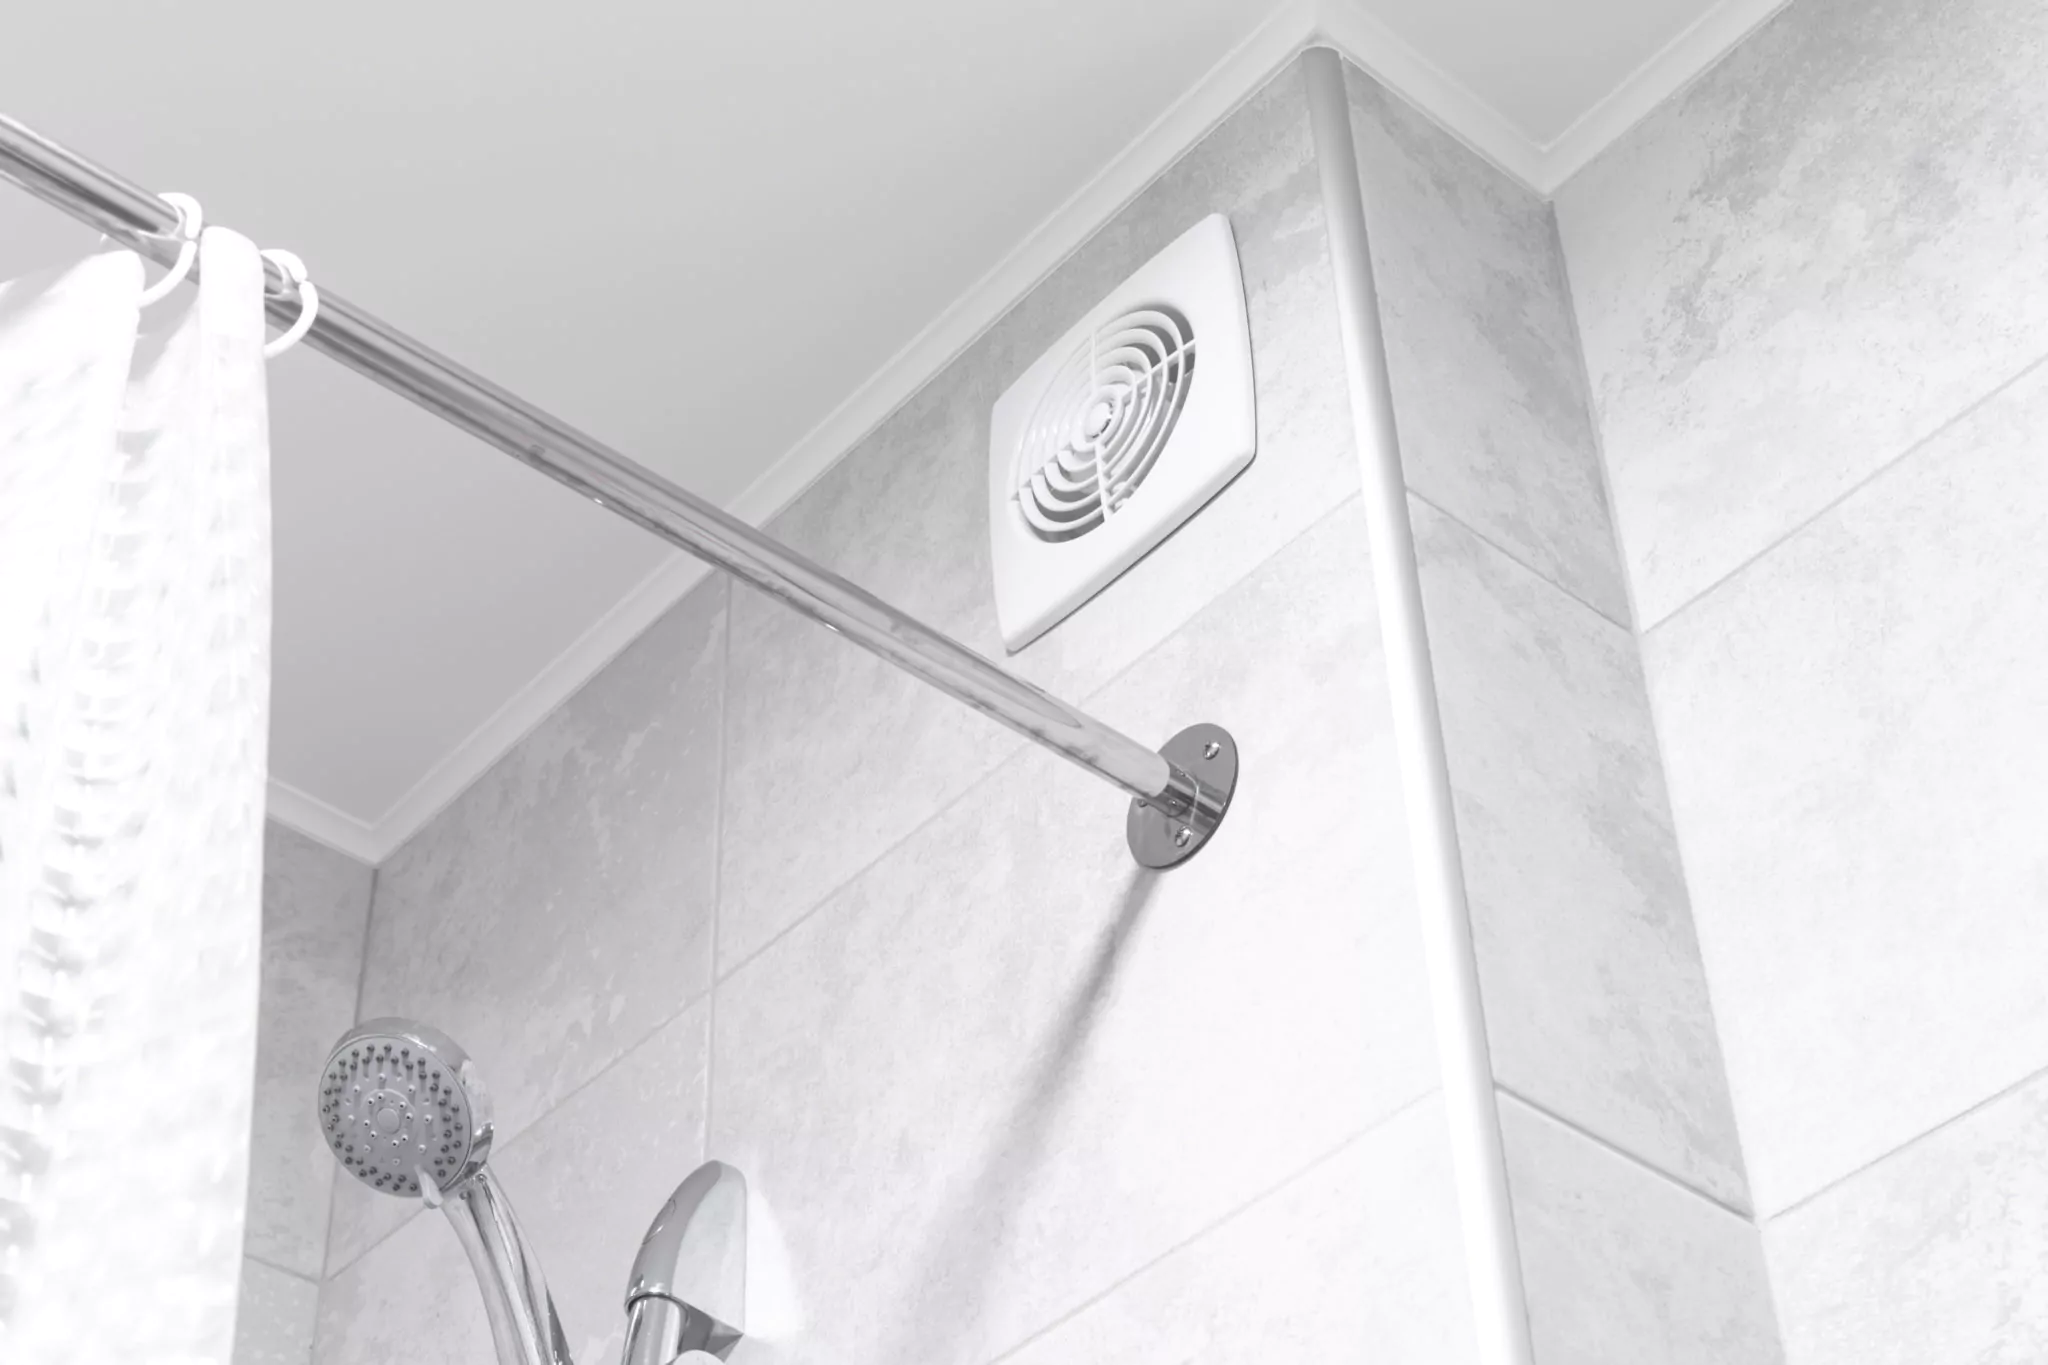 Bathroom ventilation fan in a shower toprevent condensation.